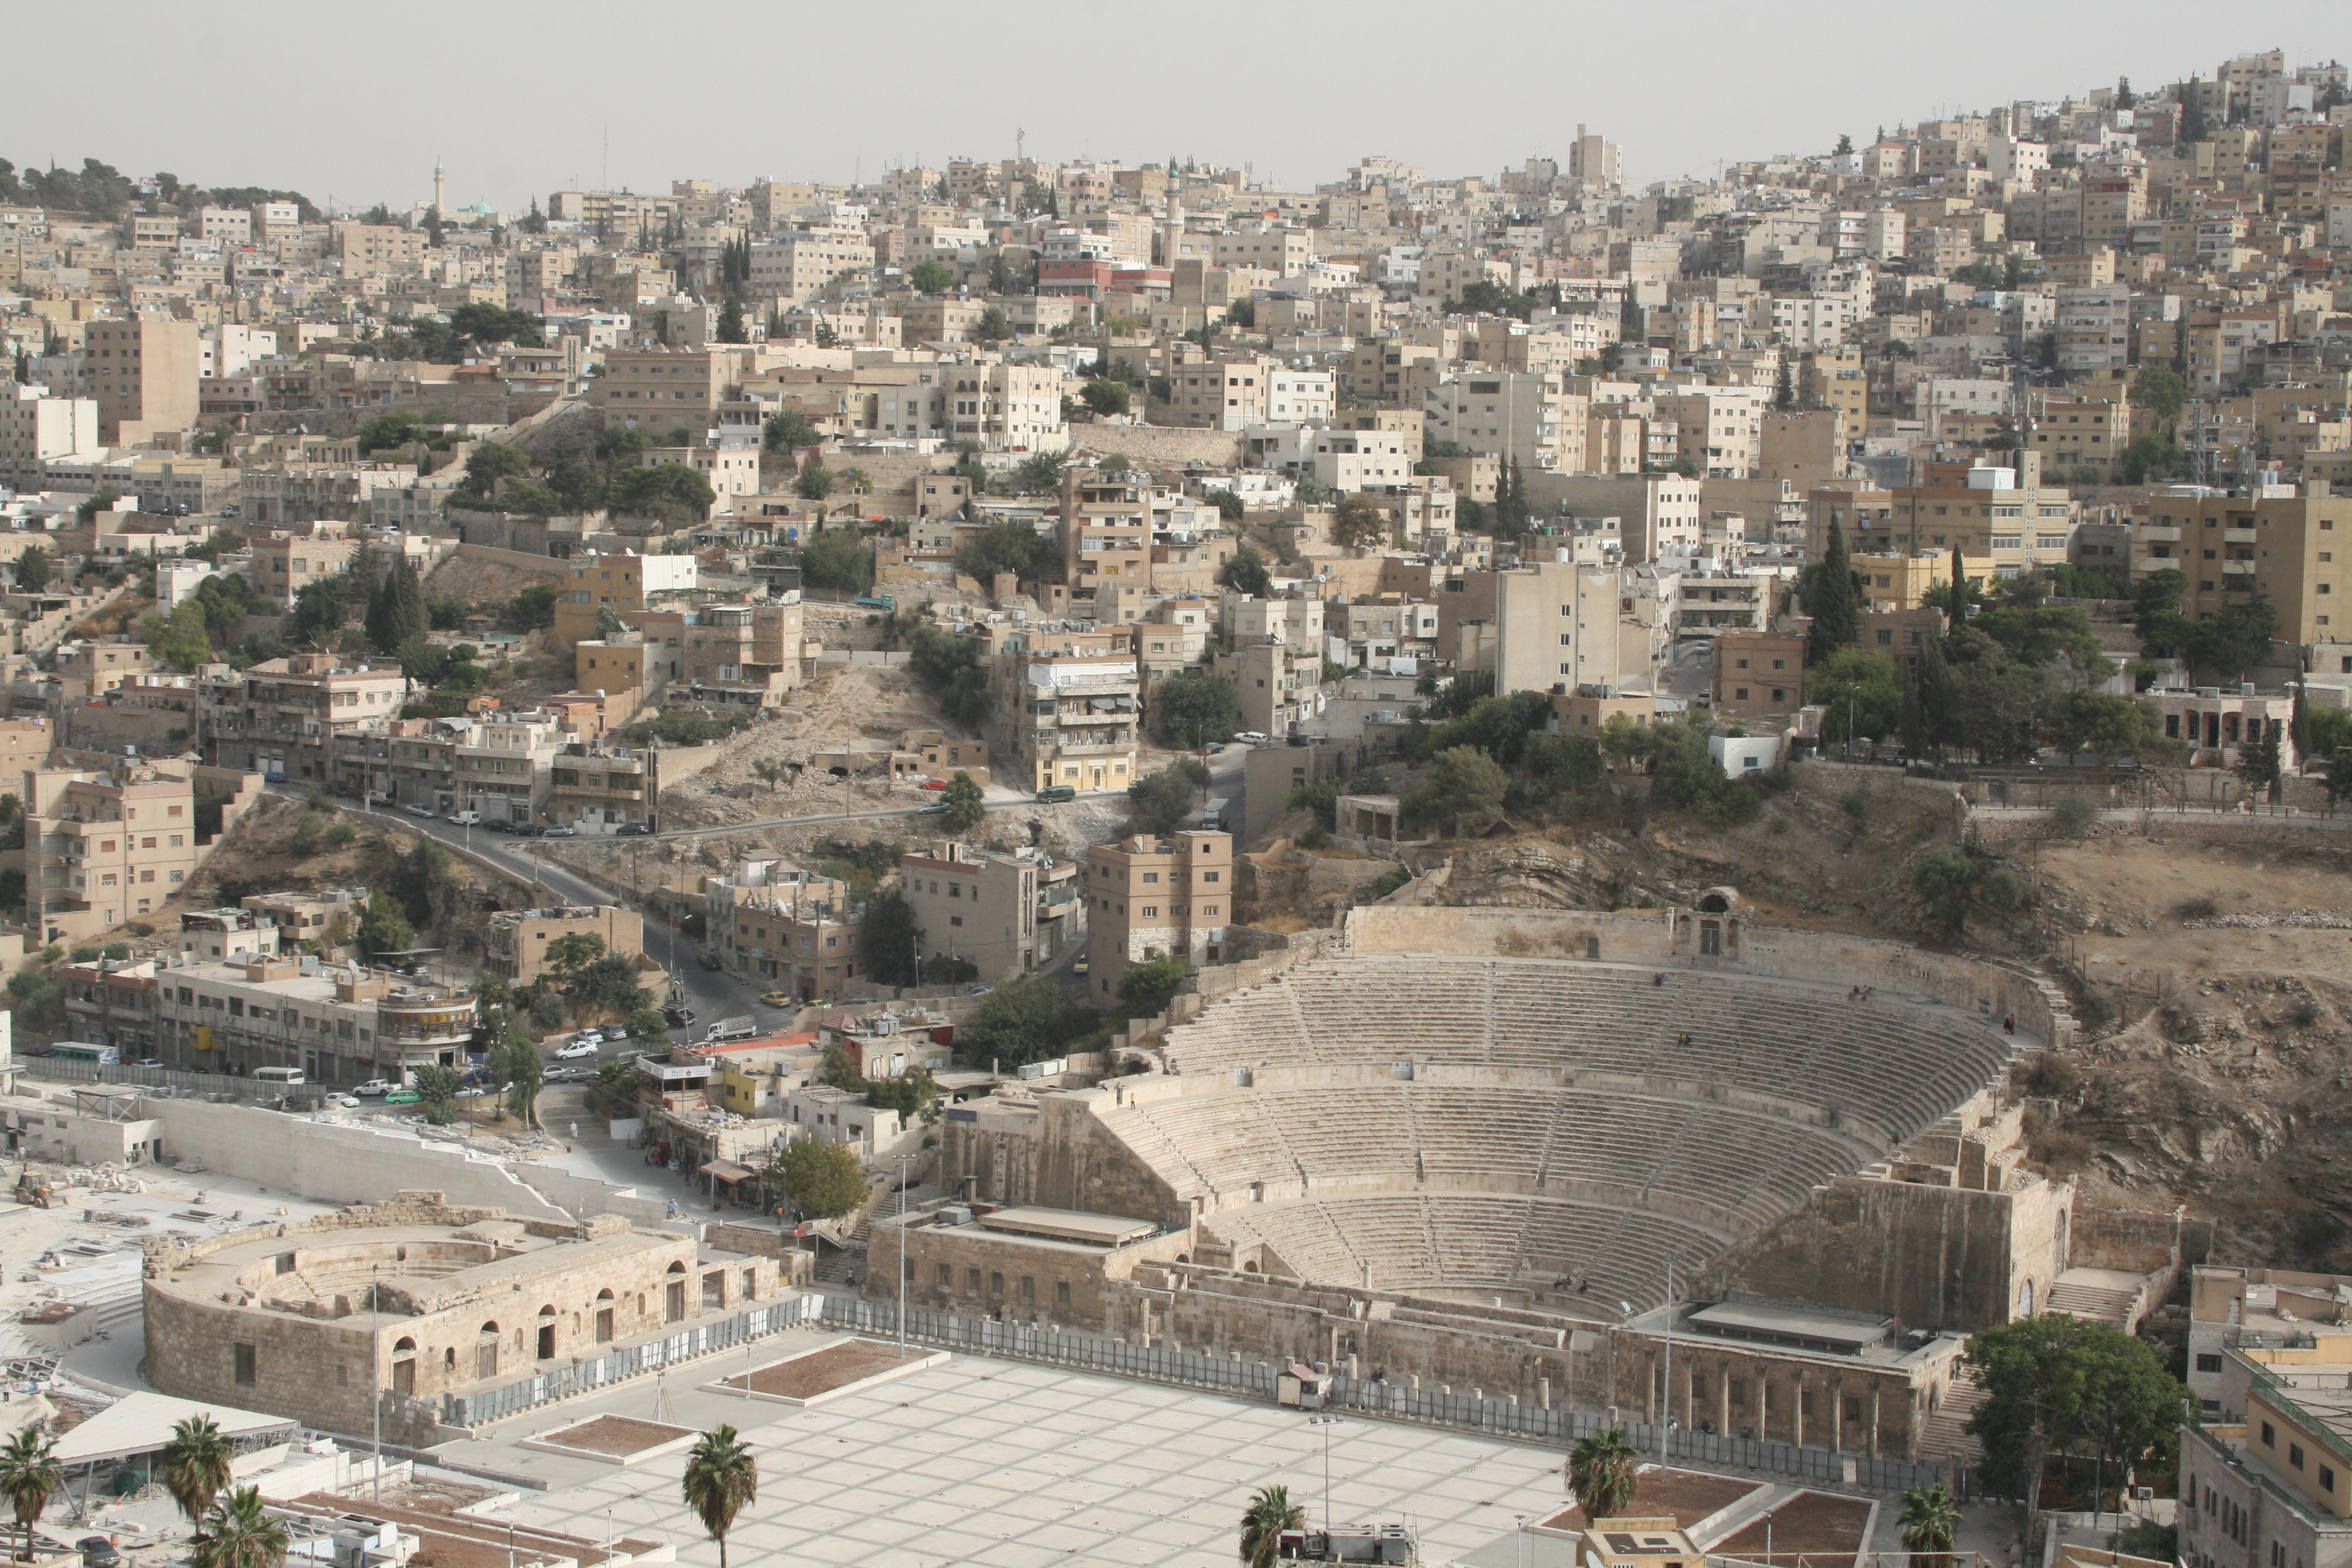 Roman theatre in Amman